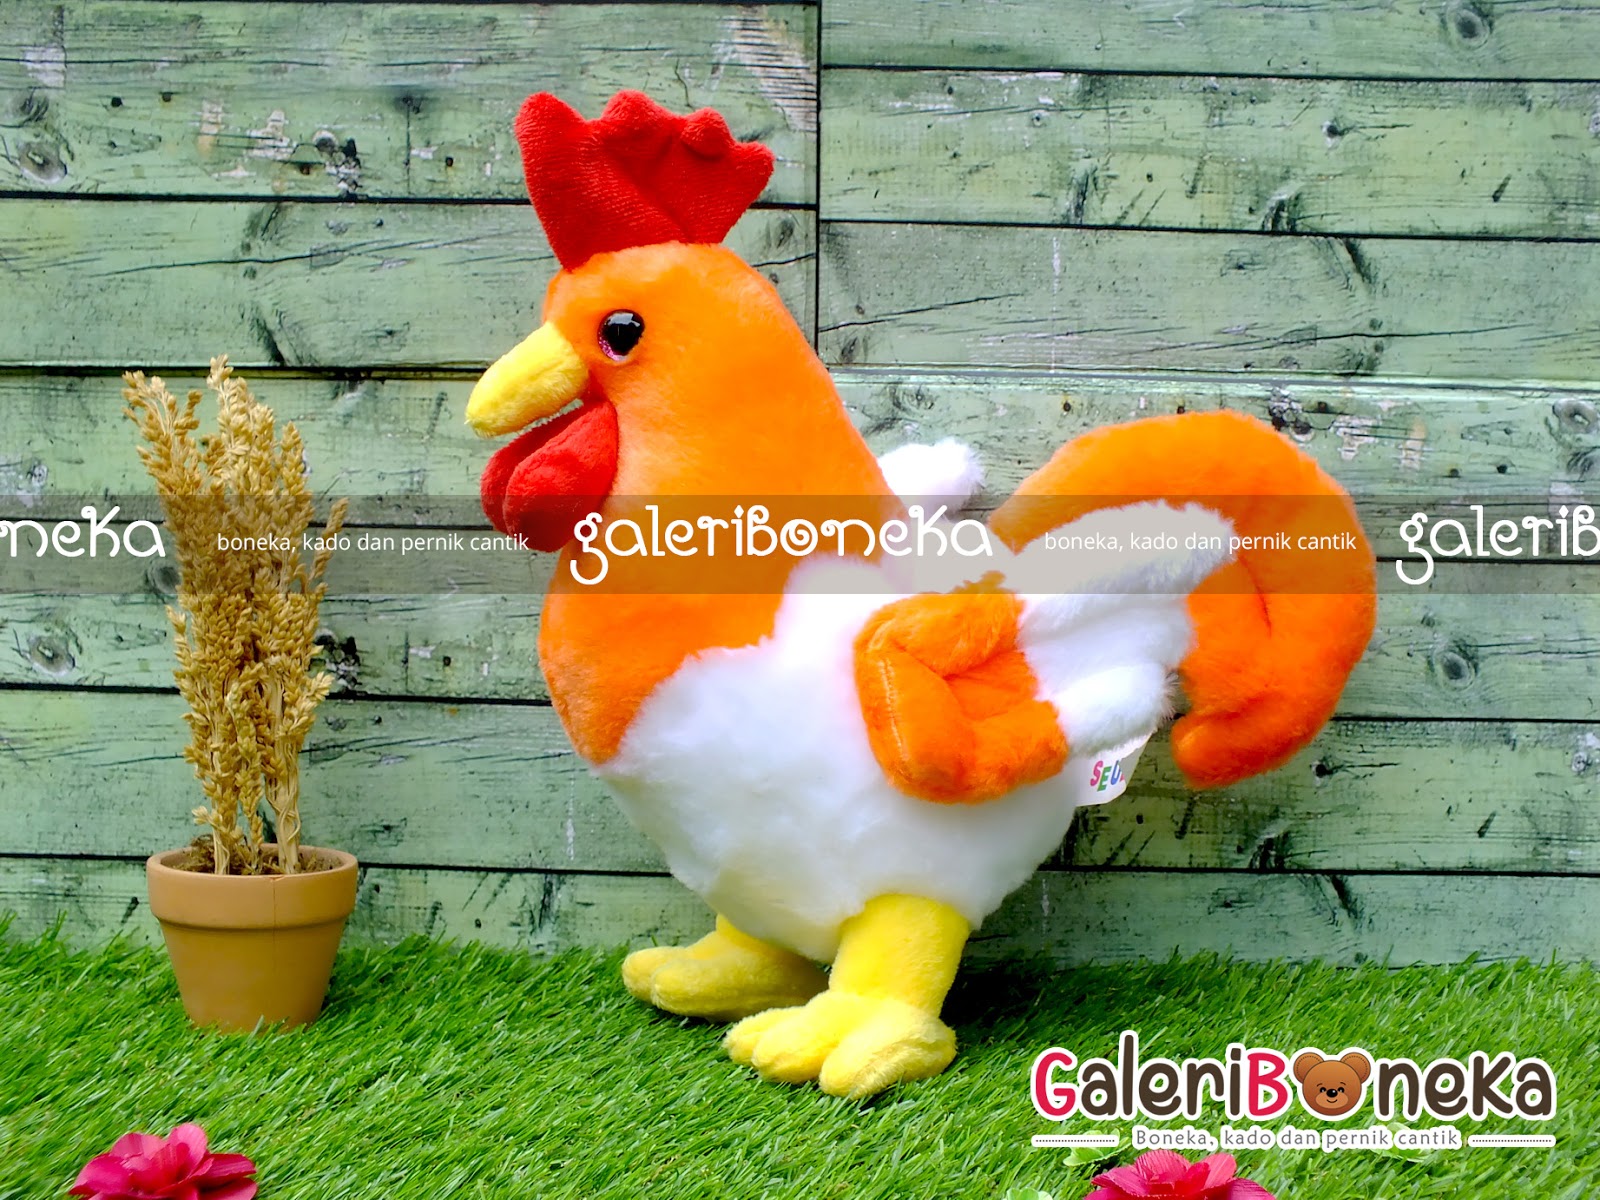 Boneka Ayam Lucu Hk 326333 Galeri Idr 87 000 Nama